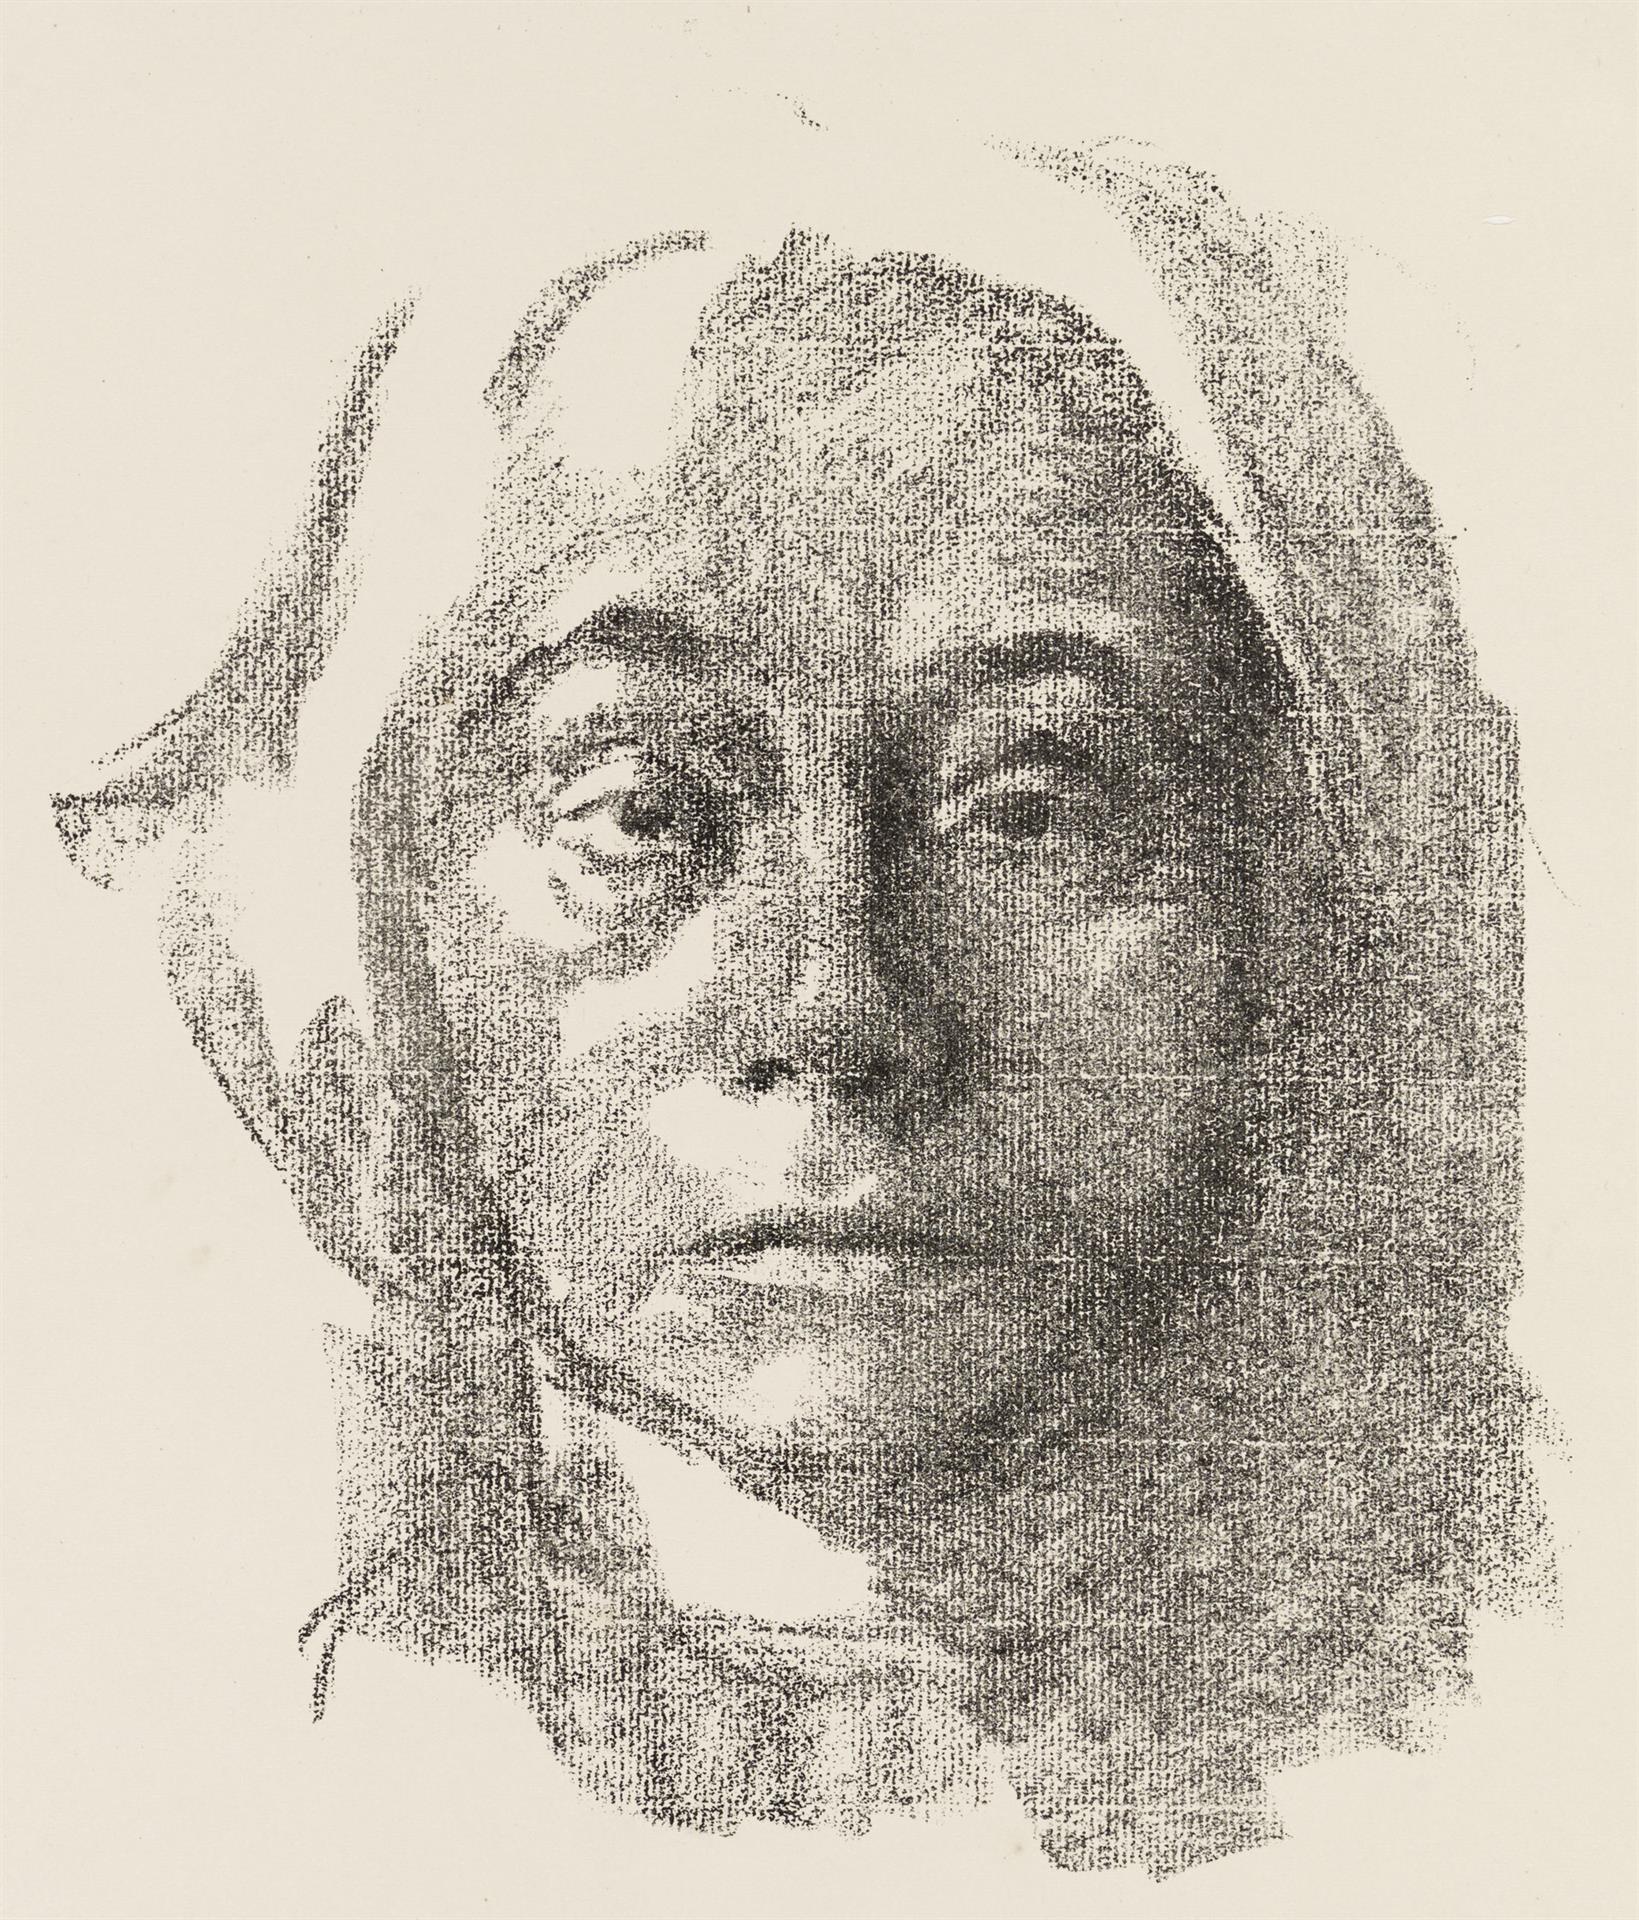 Käthe Kollwitz, Autoportrait, 1915, lithographie au crayon (report), Kn 134 c, Collection Kollwitz de Cologne © Käthe Kollwitz Museum Köln 